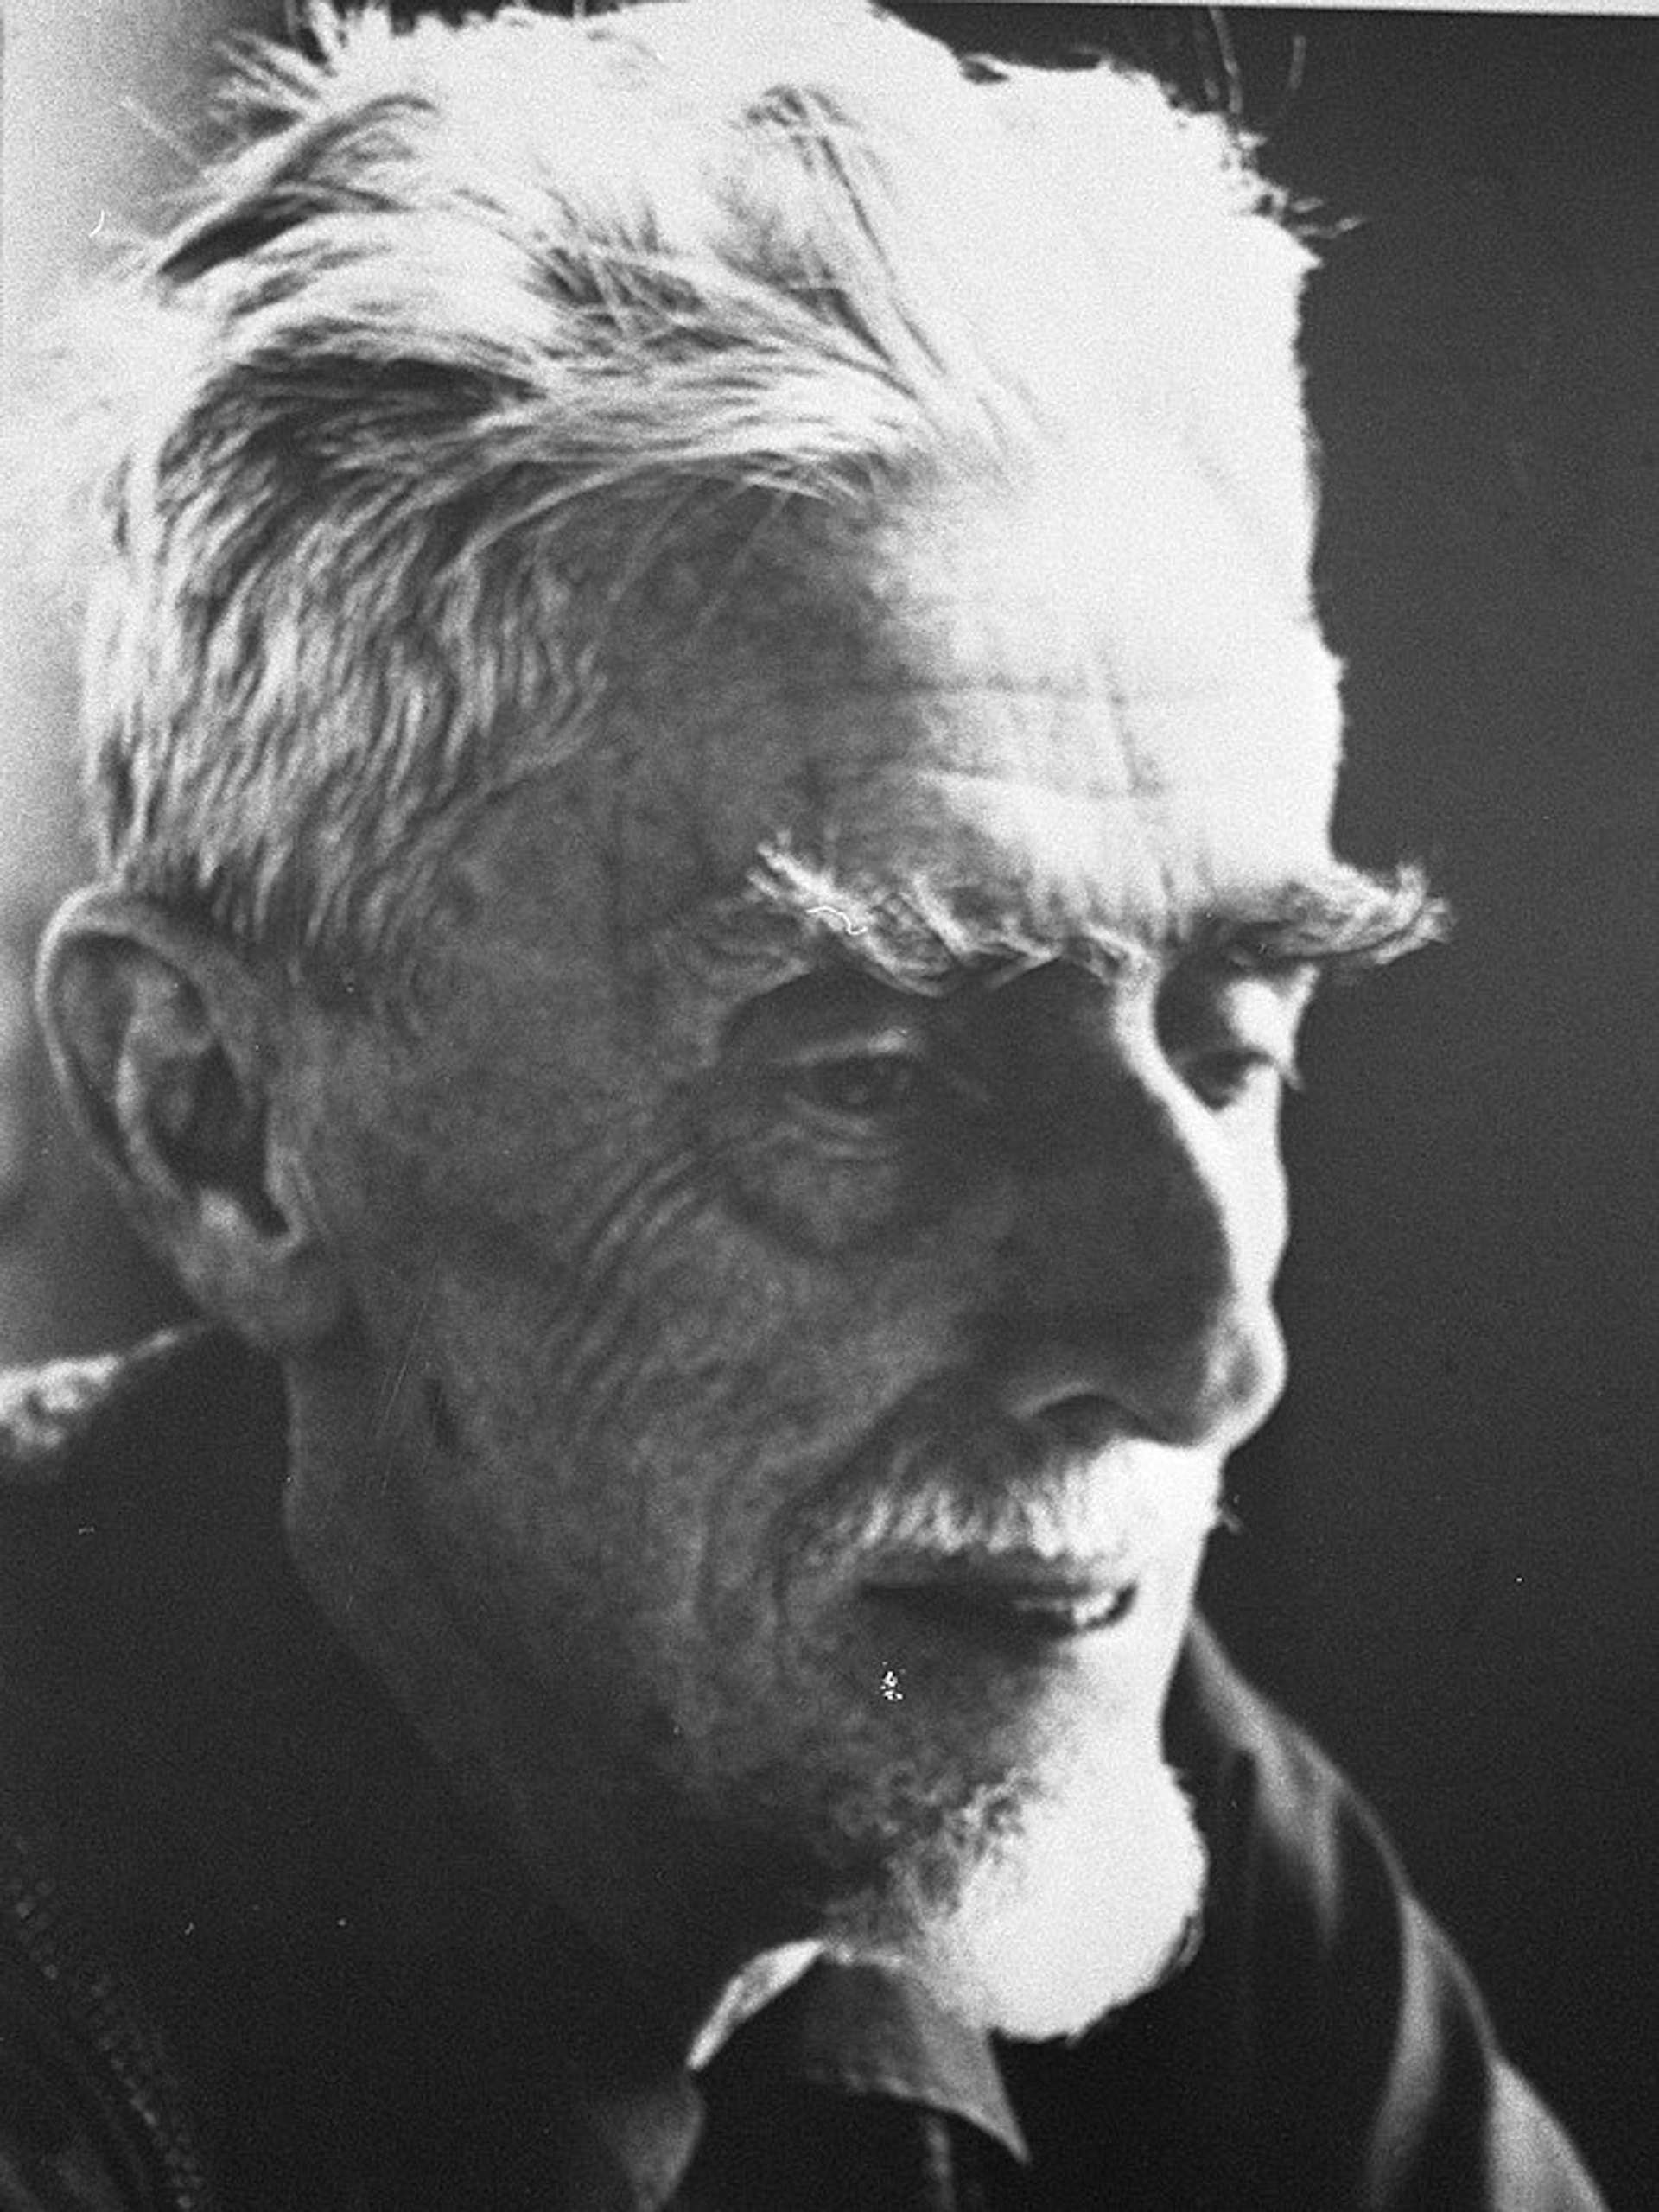 A black and white portrait photograph of Maurits Cornelis Escher.